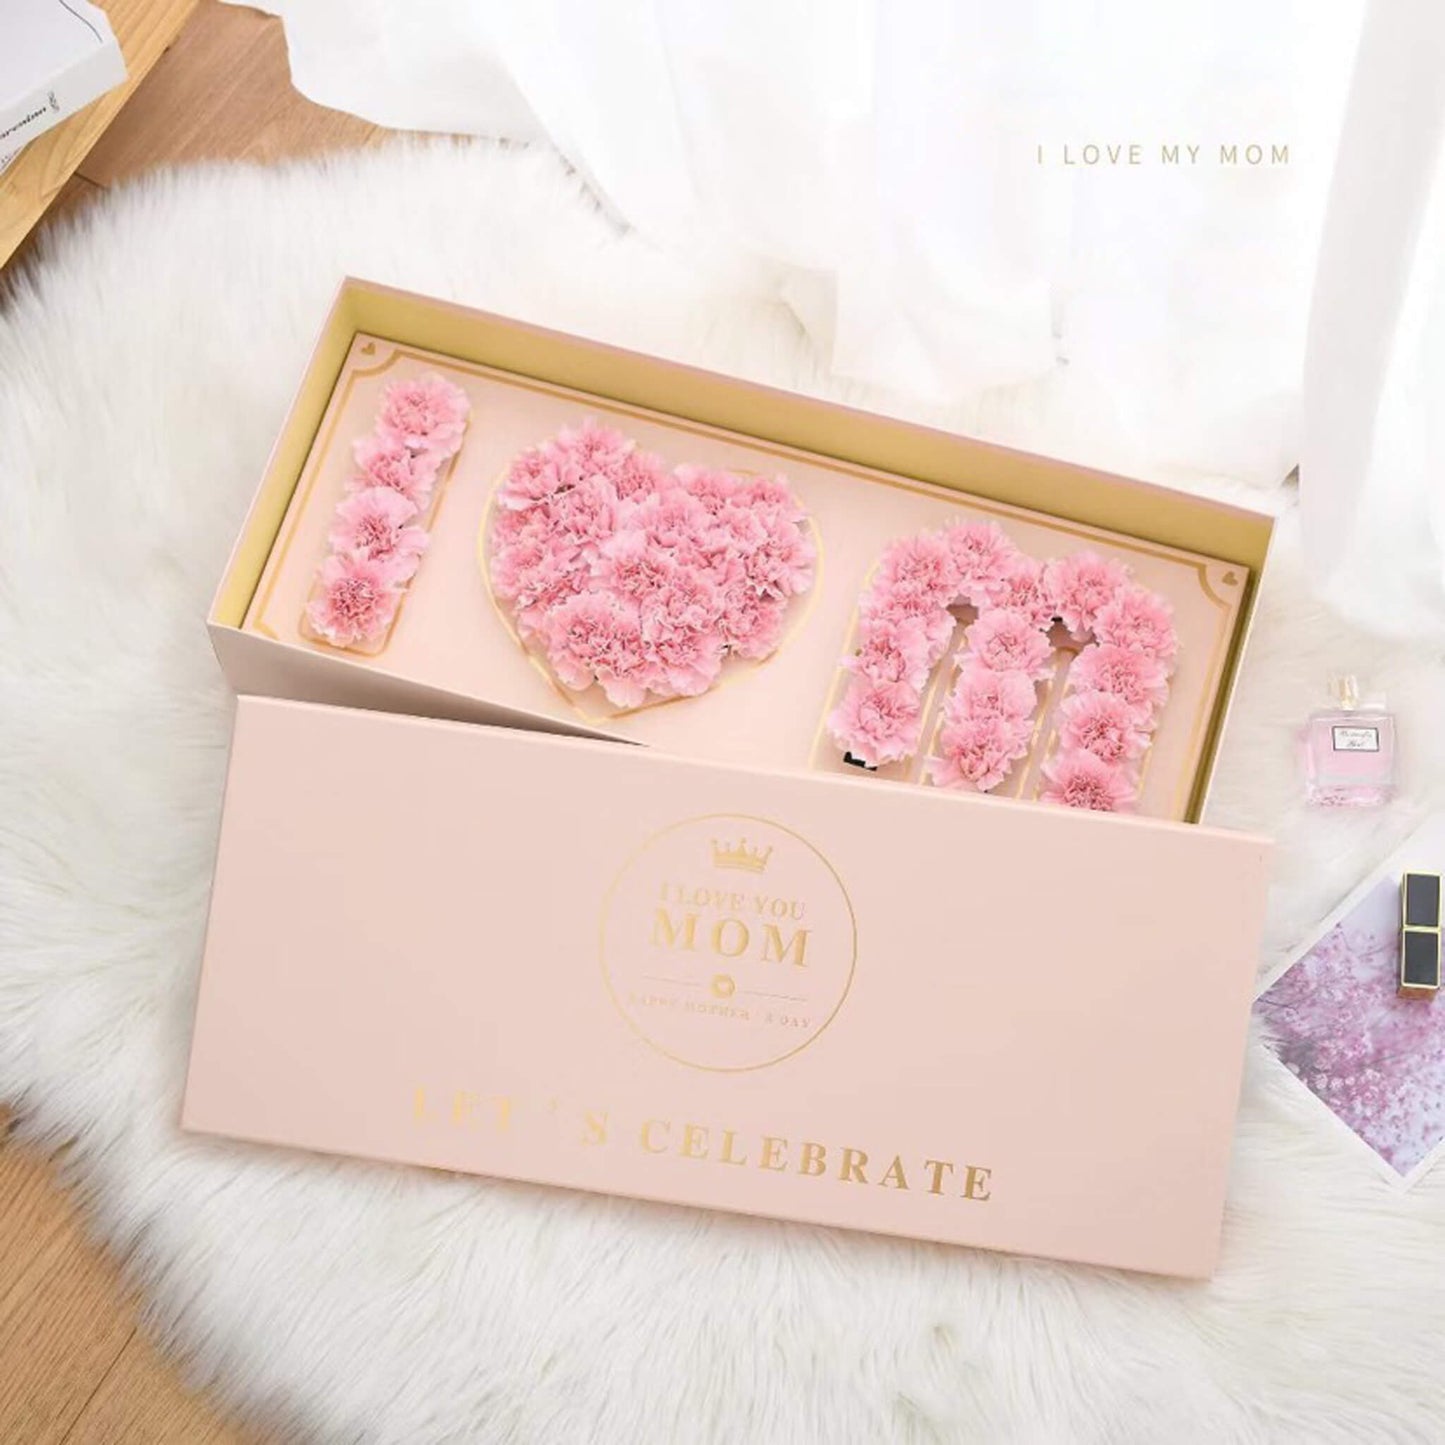 Mom Letter Flower Box I Love You Floral Gift Box - Bulk Lots